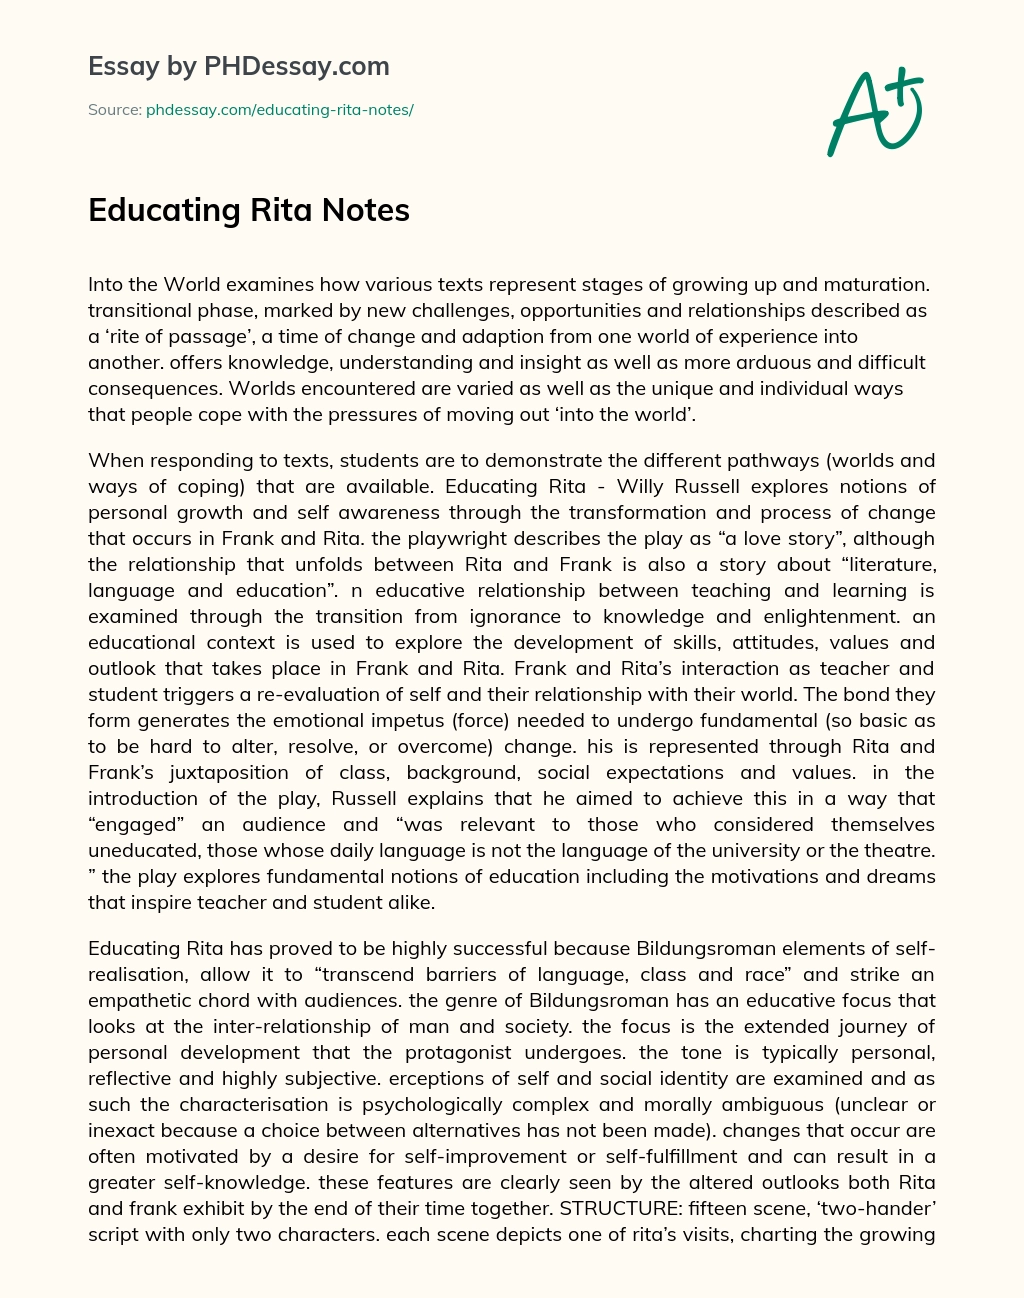 Educating Rita Notes essay